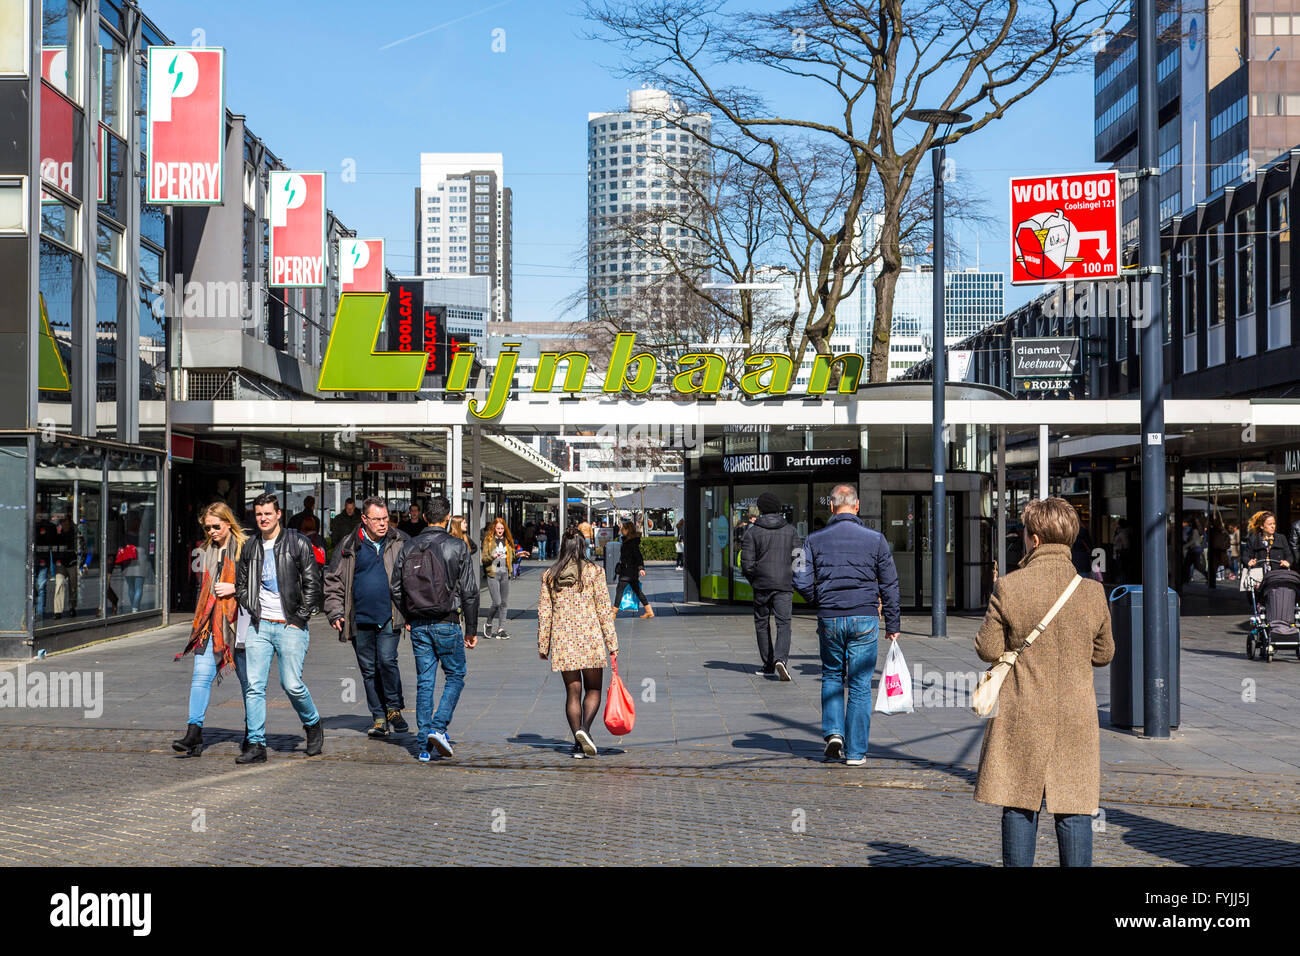 Rotterdam lijnbaan hi-res stock photography and images - Alamy